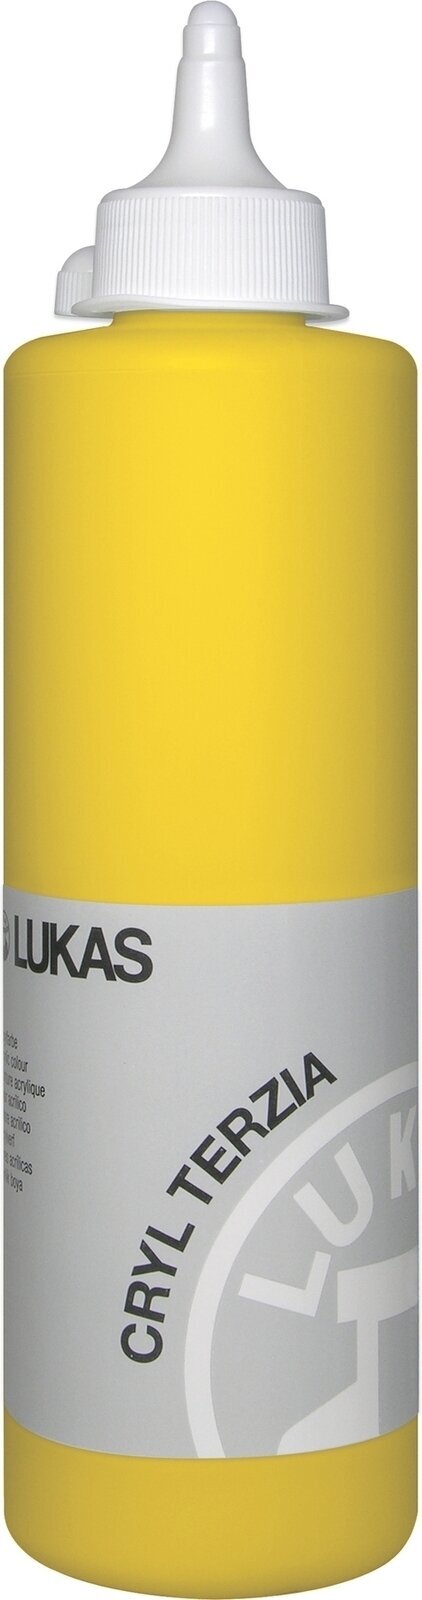 Akrilna barva Lukas Cryl Terzia Acrylic Paint Plastic Bottle Akrilna barva Cadmium Yellow Light Hue 500 ml 1 kos